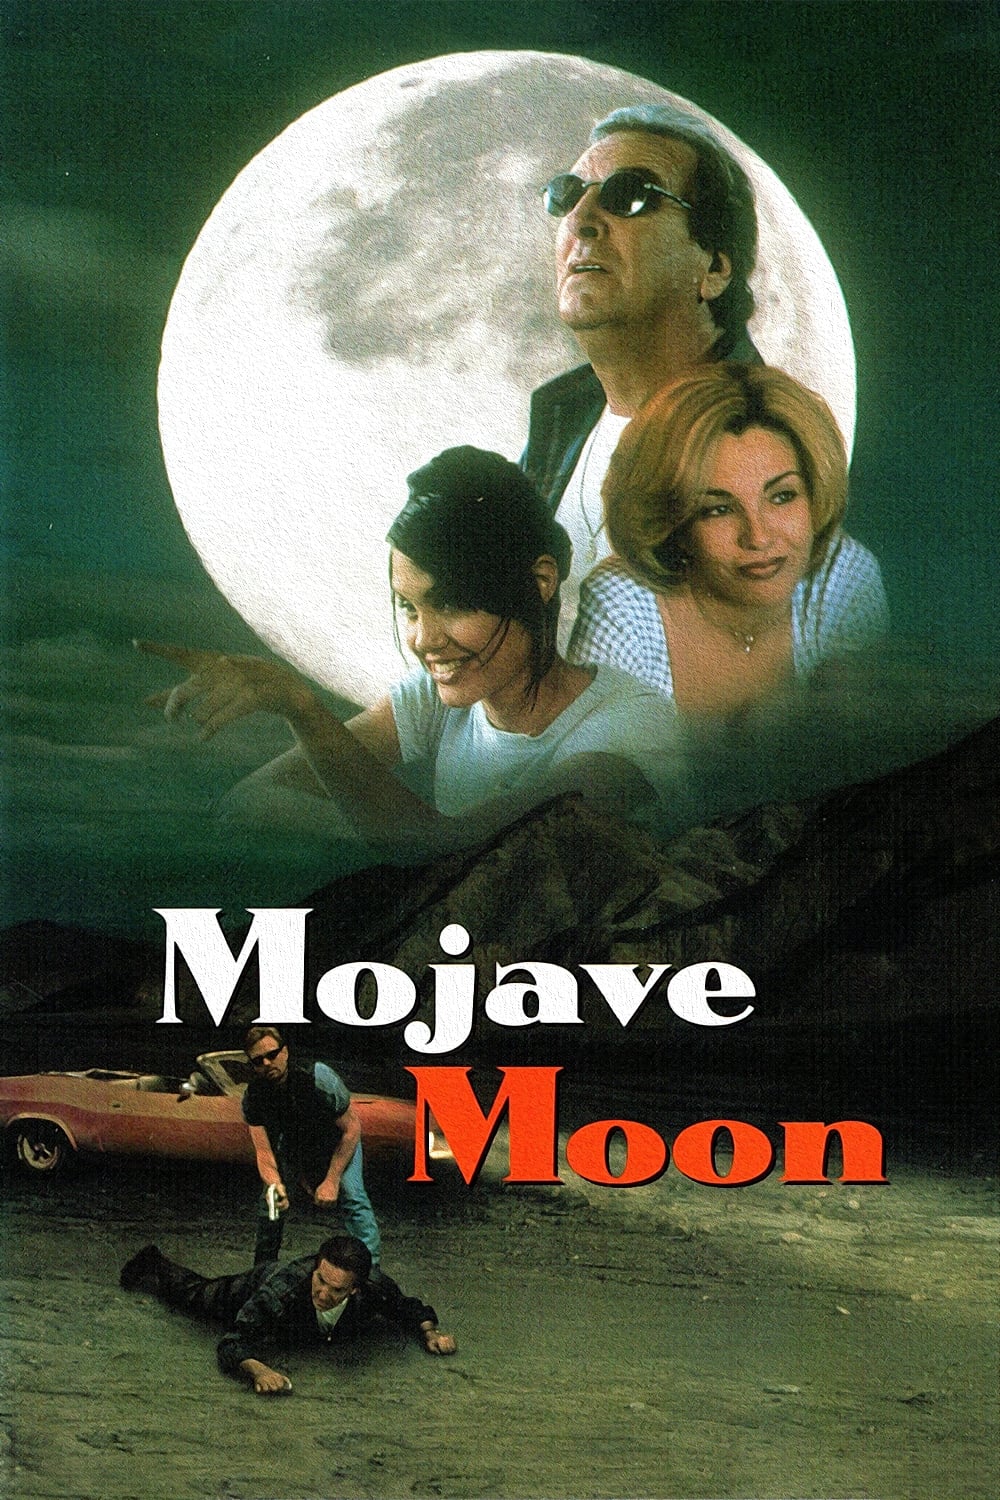 Mojave Moon (1996)